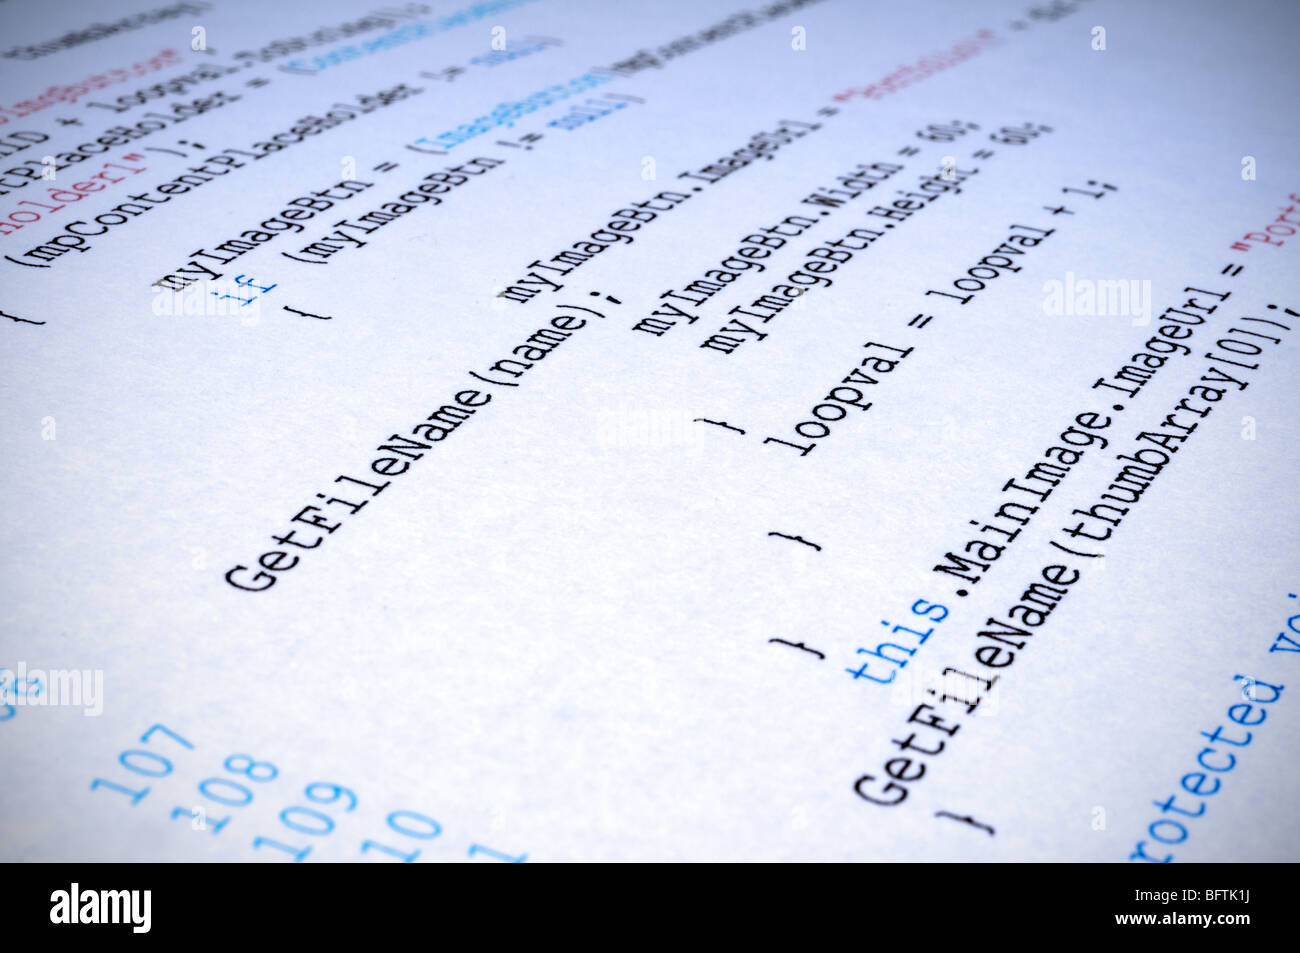 A printout of C# computer programming code language Stock Photo